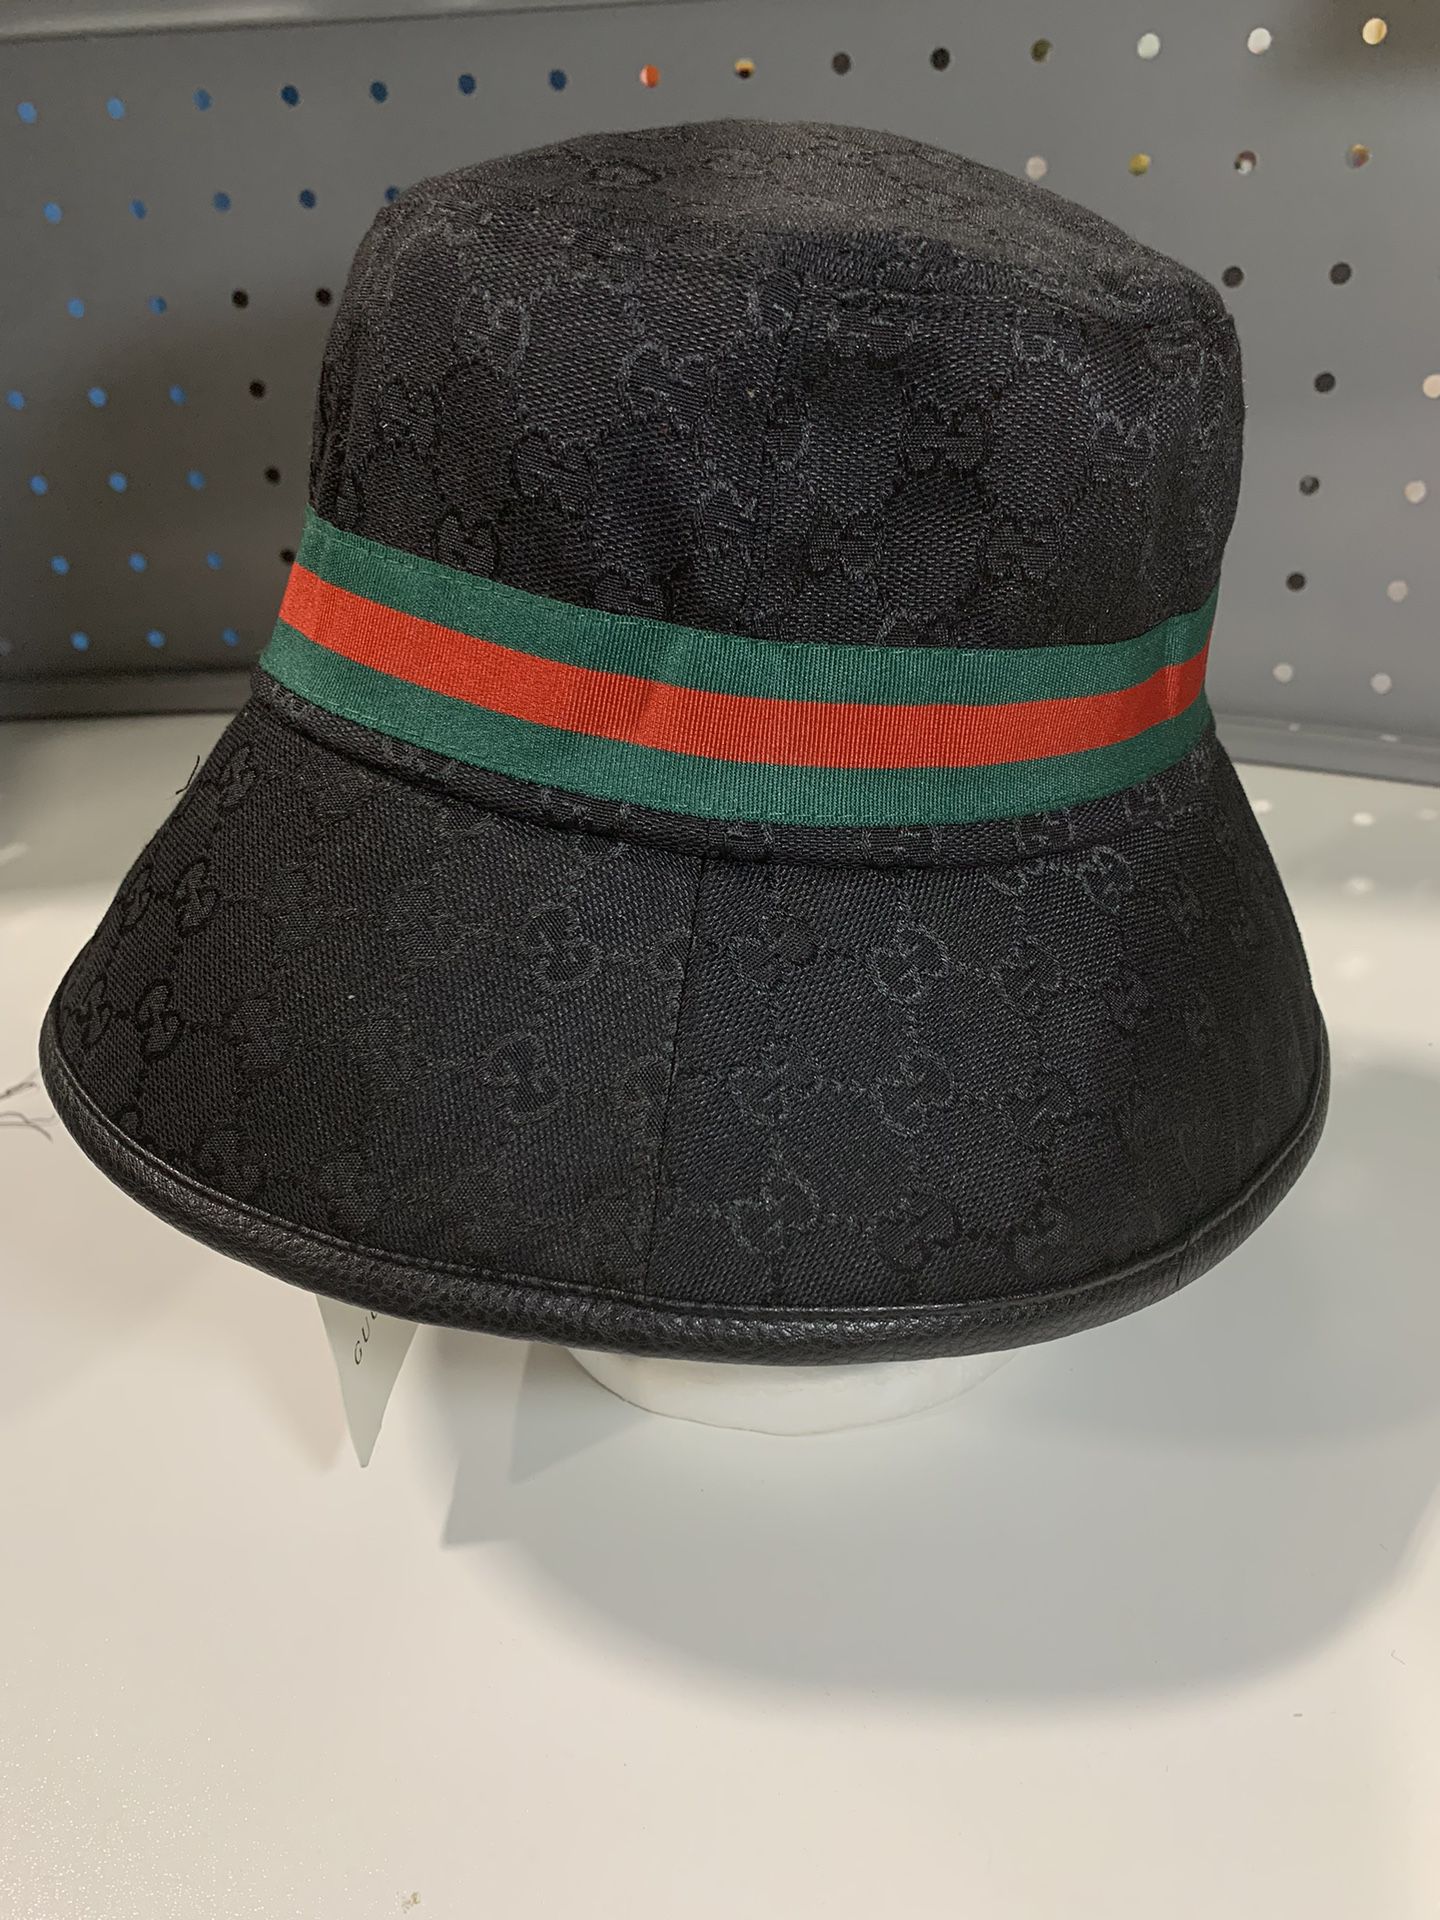 Louis Vuitton bucket hat for Sale in Fort Lauderdale, FL - OfferUp